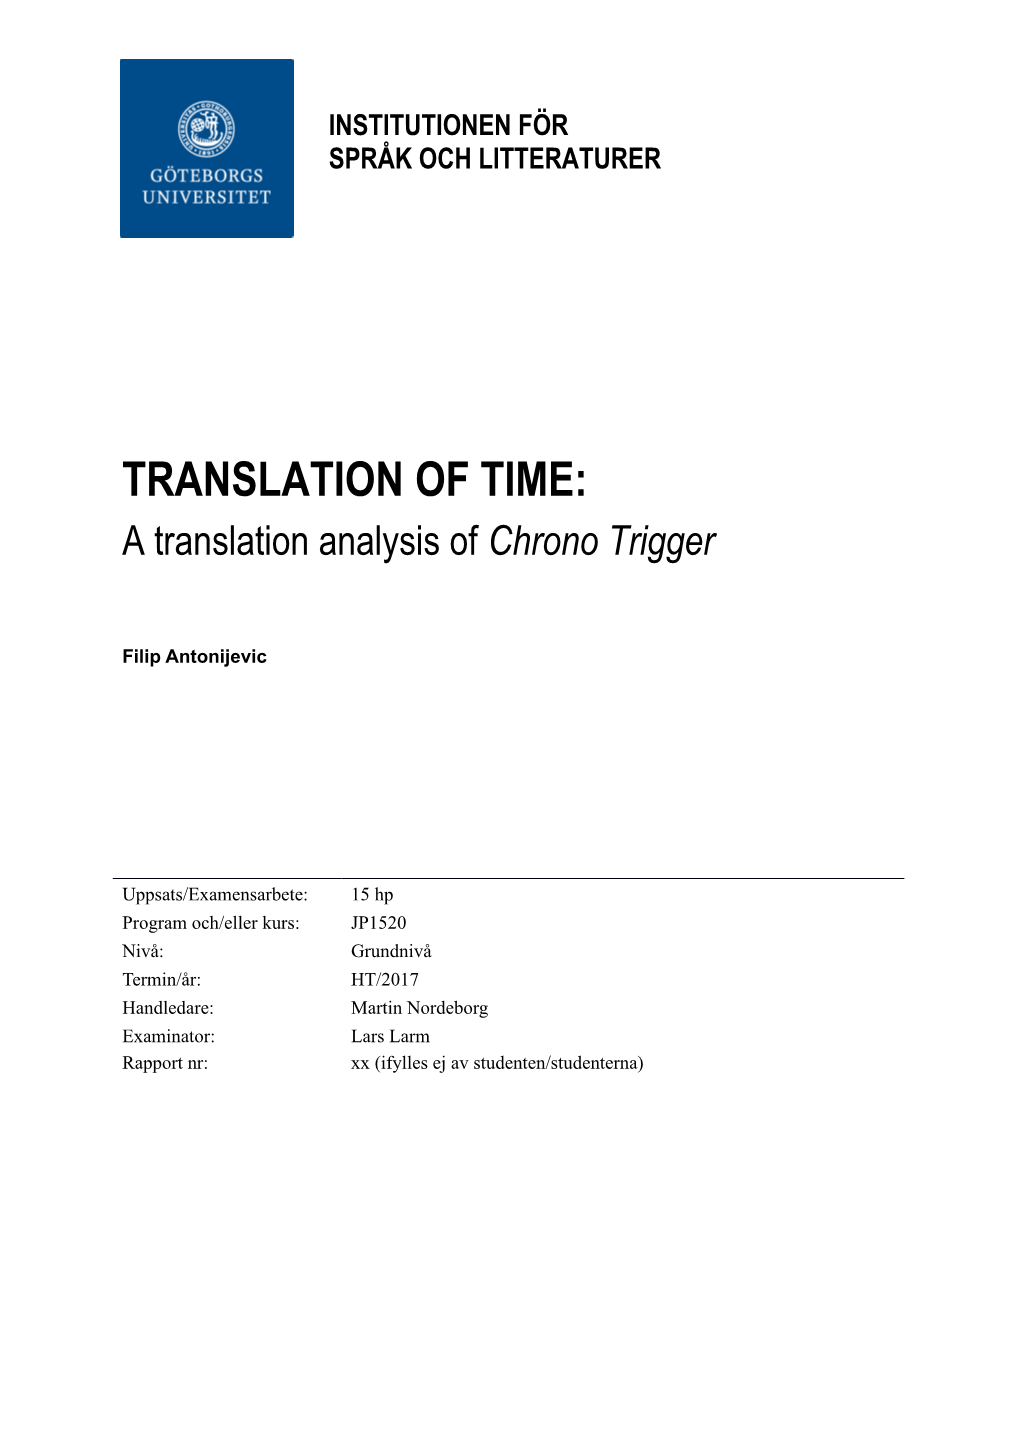 TRANSLATION of TIME: a Translation Analysis of Chrono Trigger